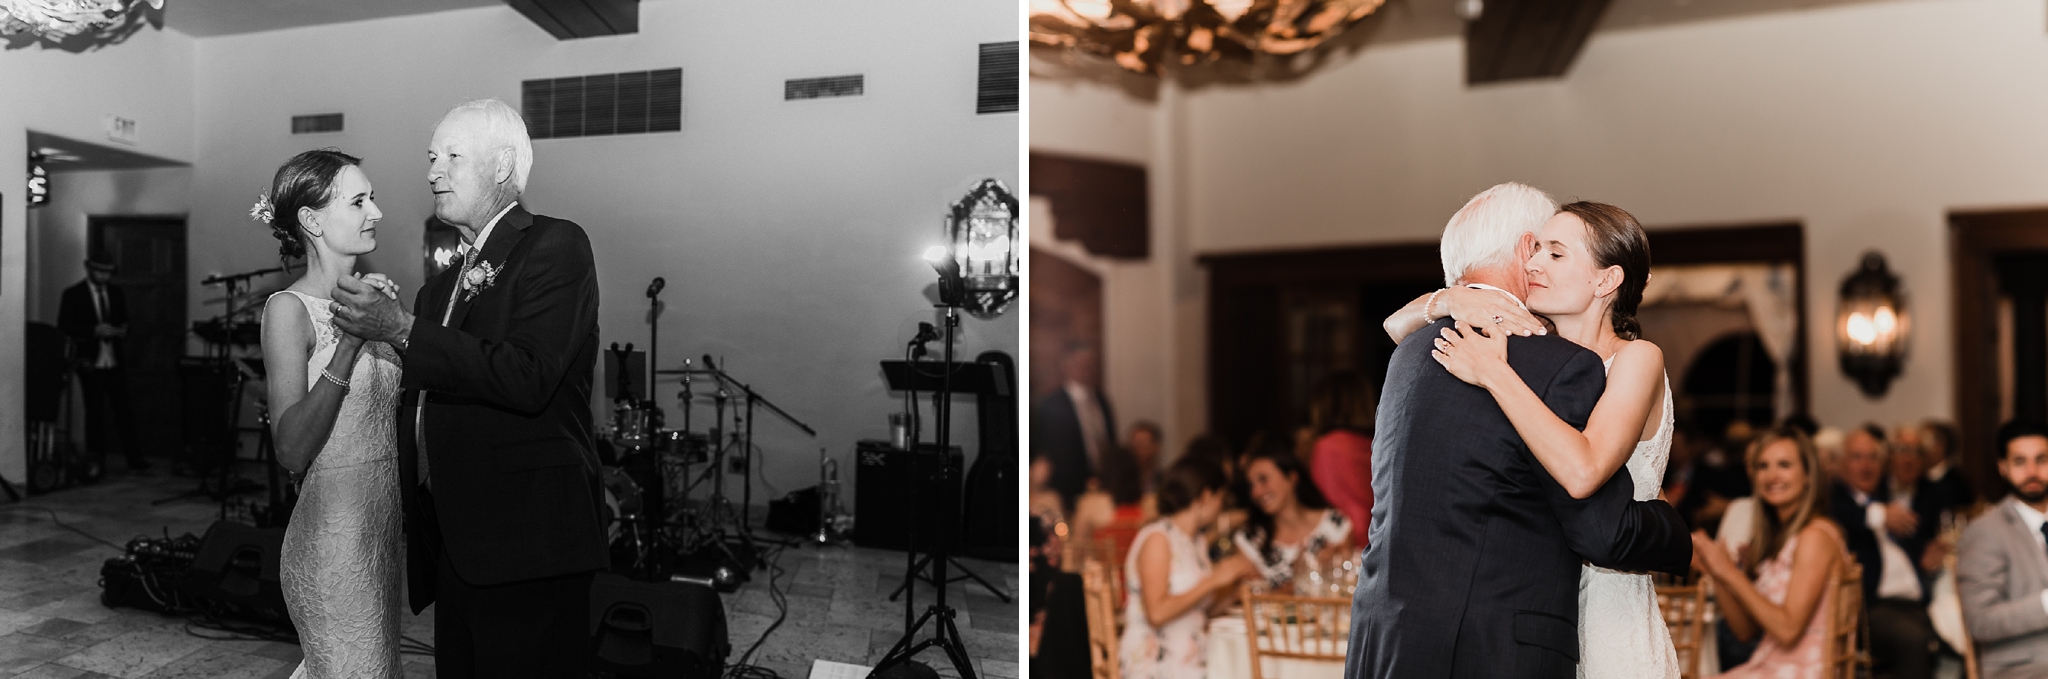 Alicia+lucia+photography+-+albuquerque+wedding+photographer+-+santa+fe+wedding+photography+-+new+mexico+wedding+photographer+-+new+mexico+wedding+-+santa+fe+wedding+-+la+fonda+on+the+plaza+wedding+-+jewish+wedding_0140.jpg